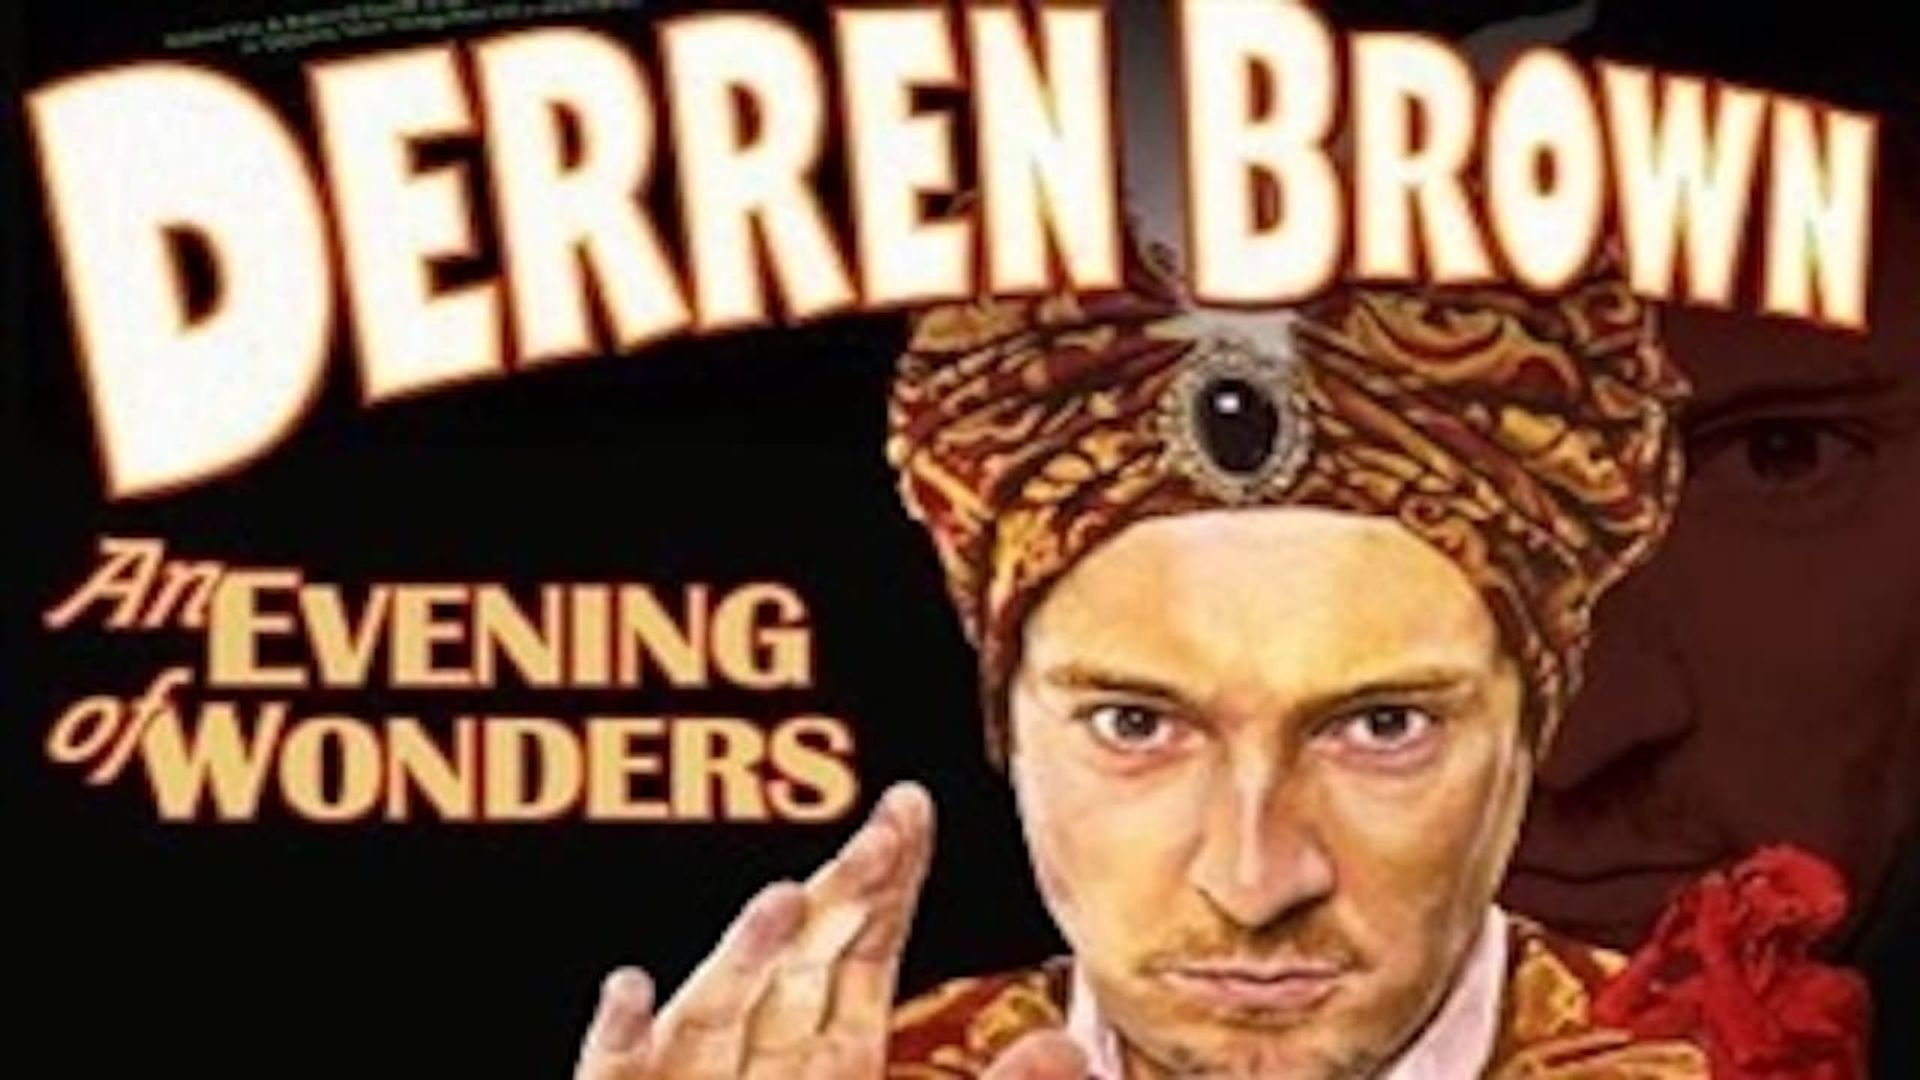 Derren Brown: An Evening of Wonders background